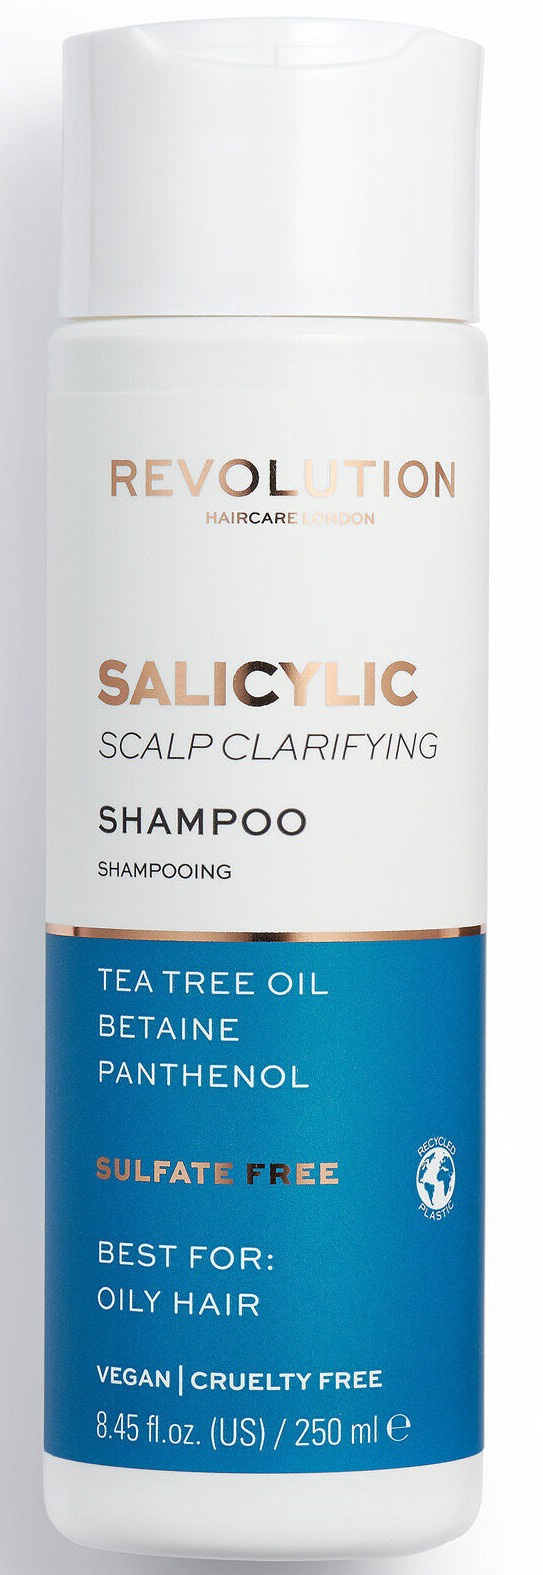 Revolution HairCare Salicylic Scalp Clarifying Shampoo